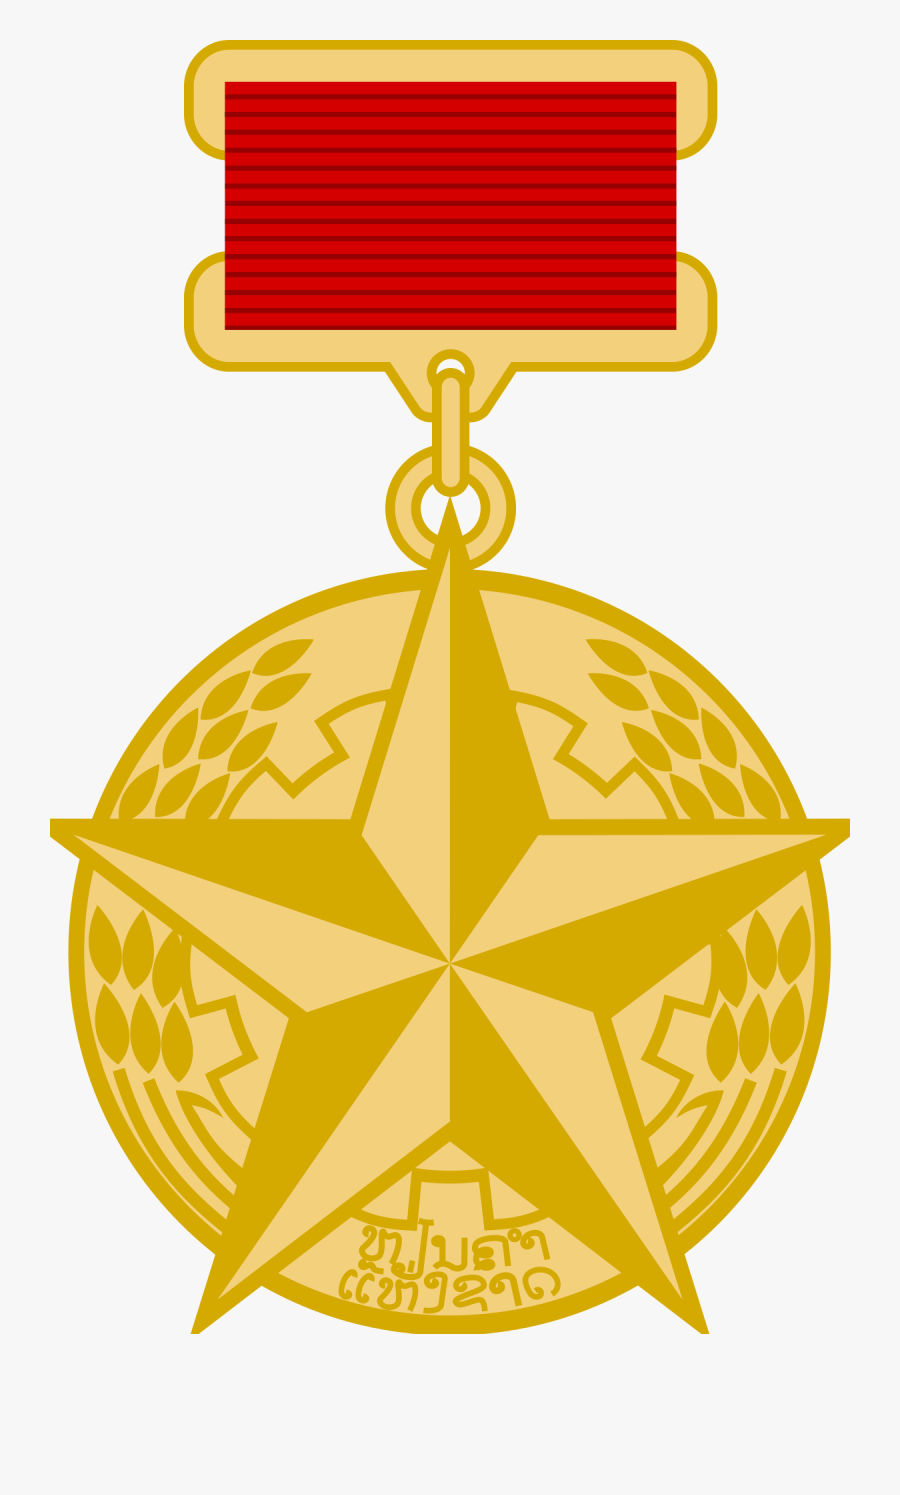 Medalla Dd Oro Png, Transparent Clipart